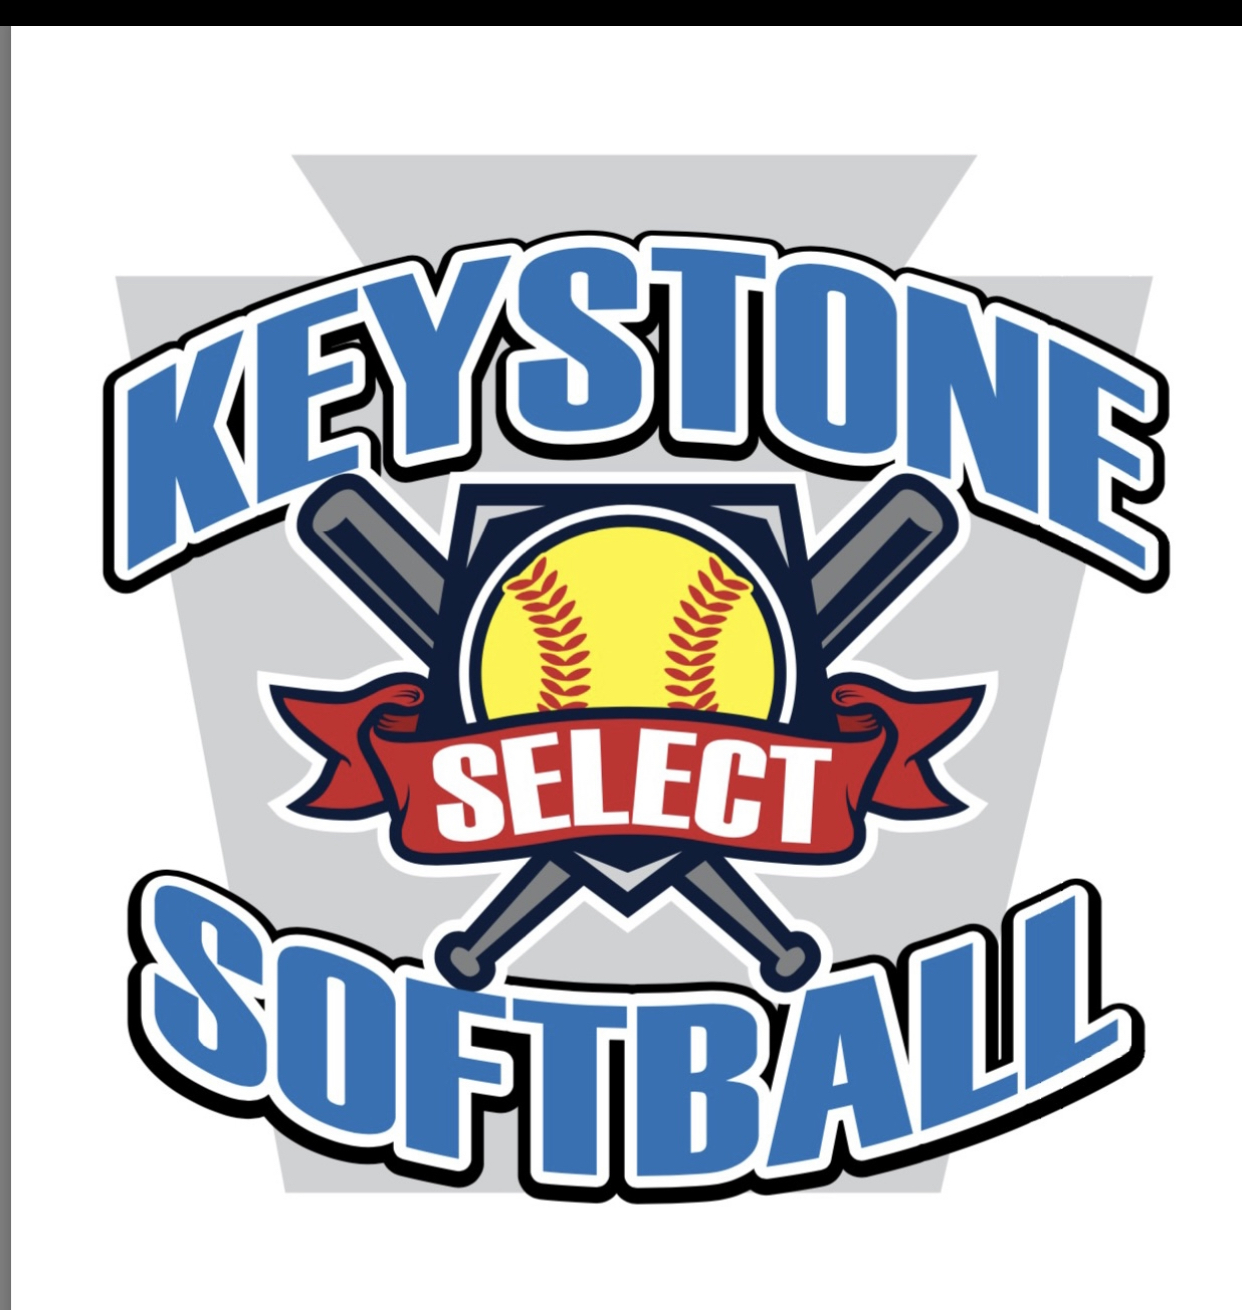 Keystone Select Softball NCS Northeast Nationals Tournament 3 day Event 5GG Logo